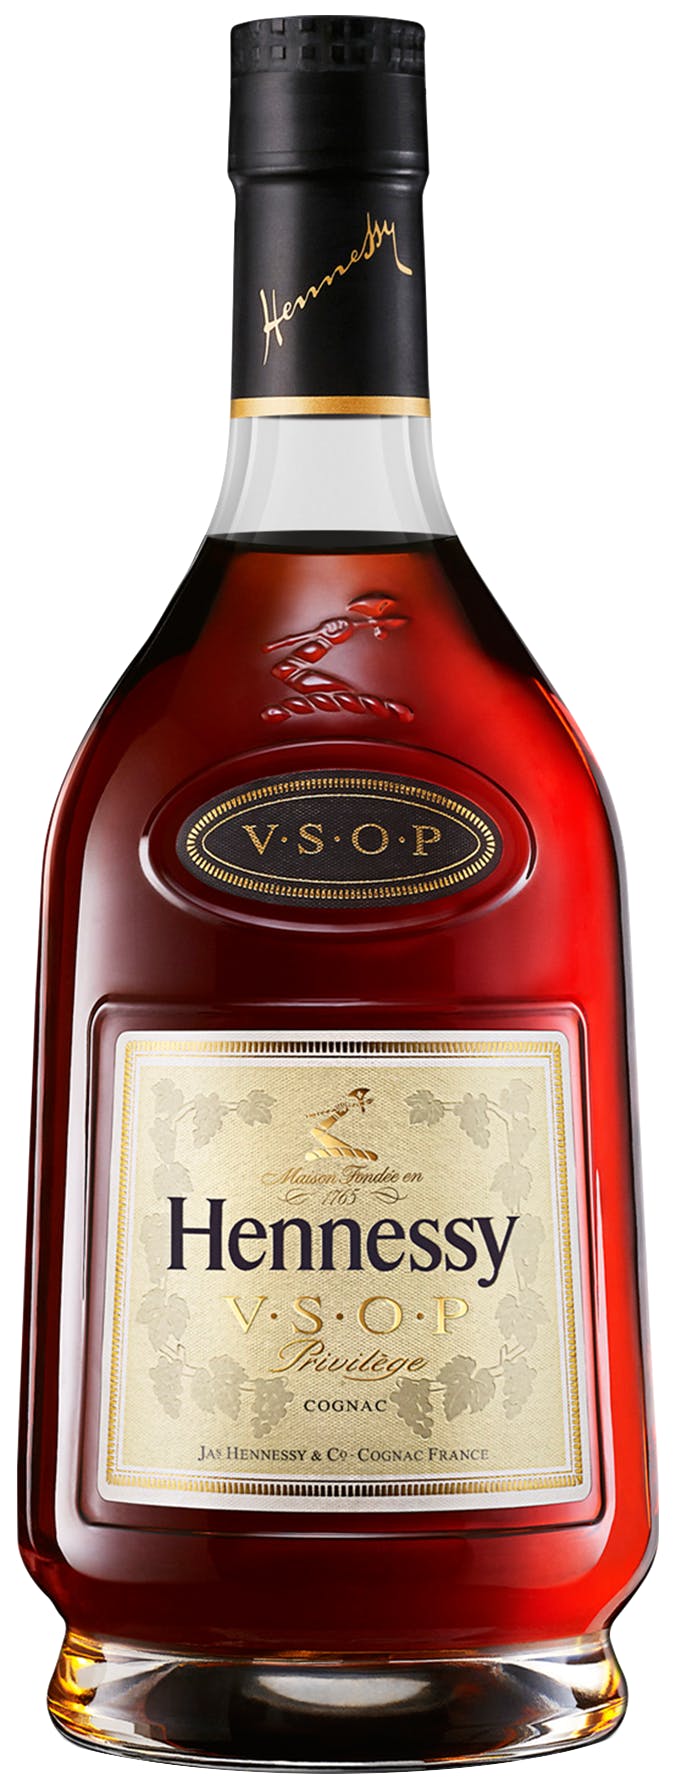 Hennessy V.S.O.P Cognac 200ml Delivery in Miami, FL